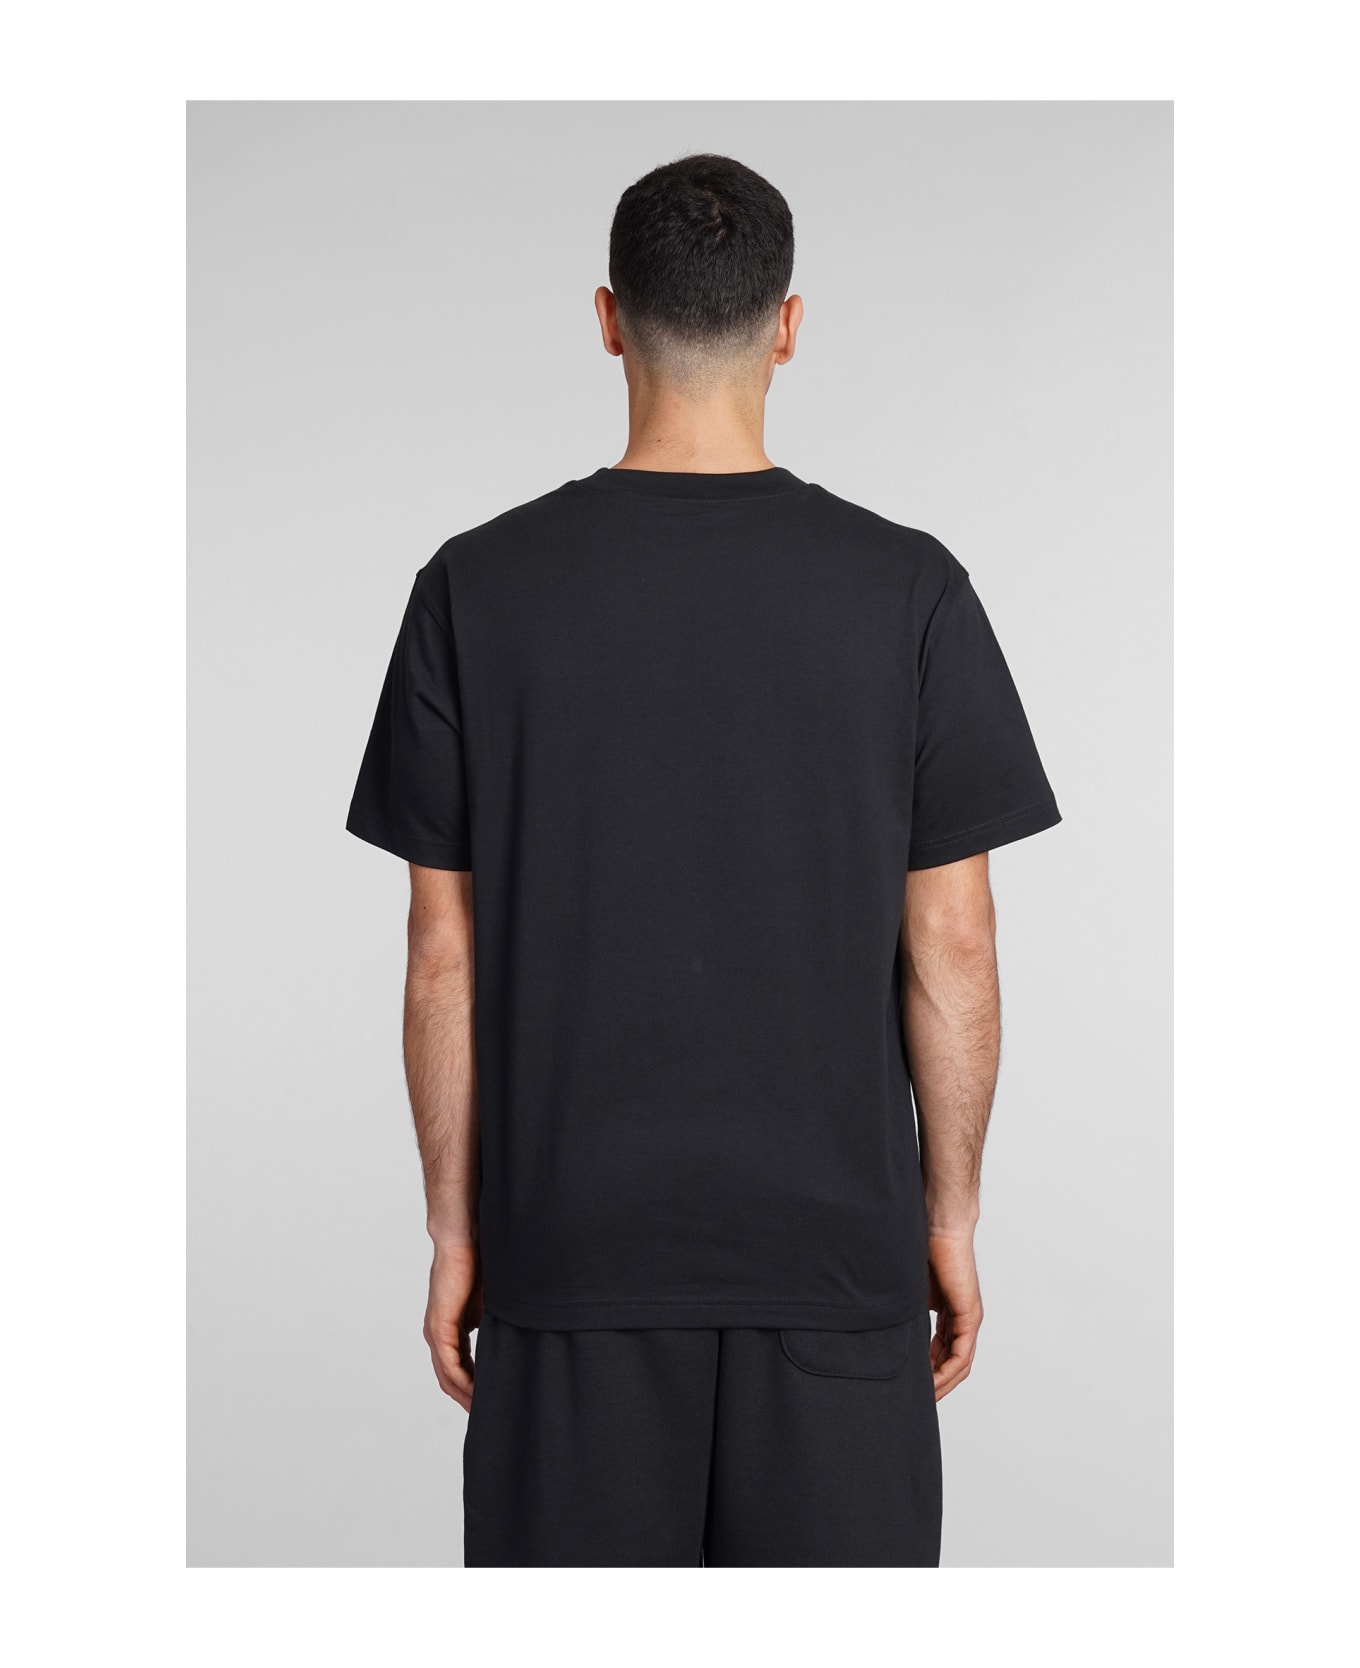 New Balance T-shirt In Black Cotton - black